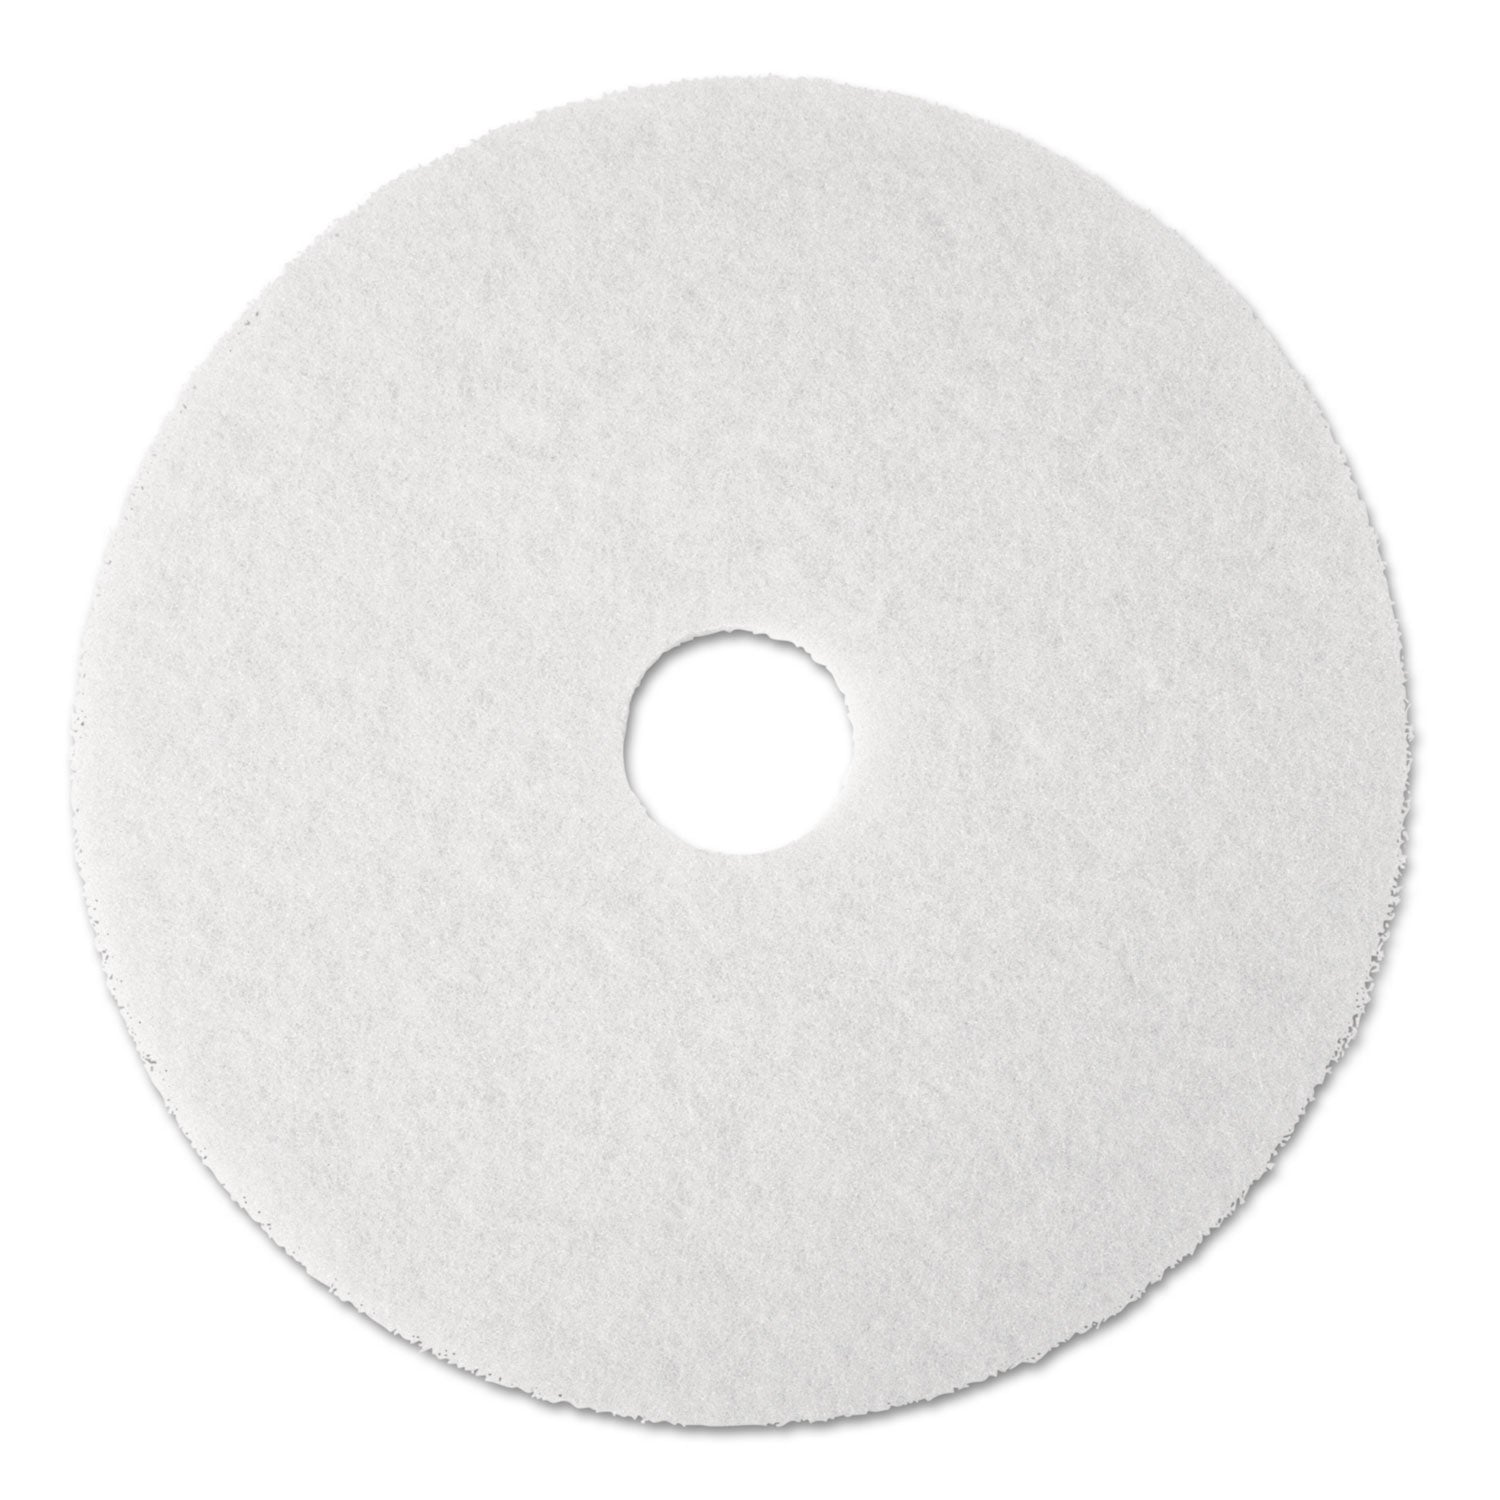 Low-Speed Super Polishing Floor Pads 4100, 17" Diameter, White, 5/Carton - 